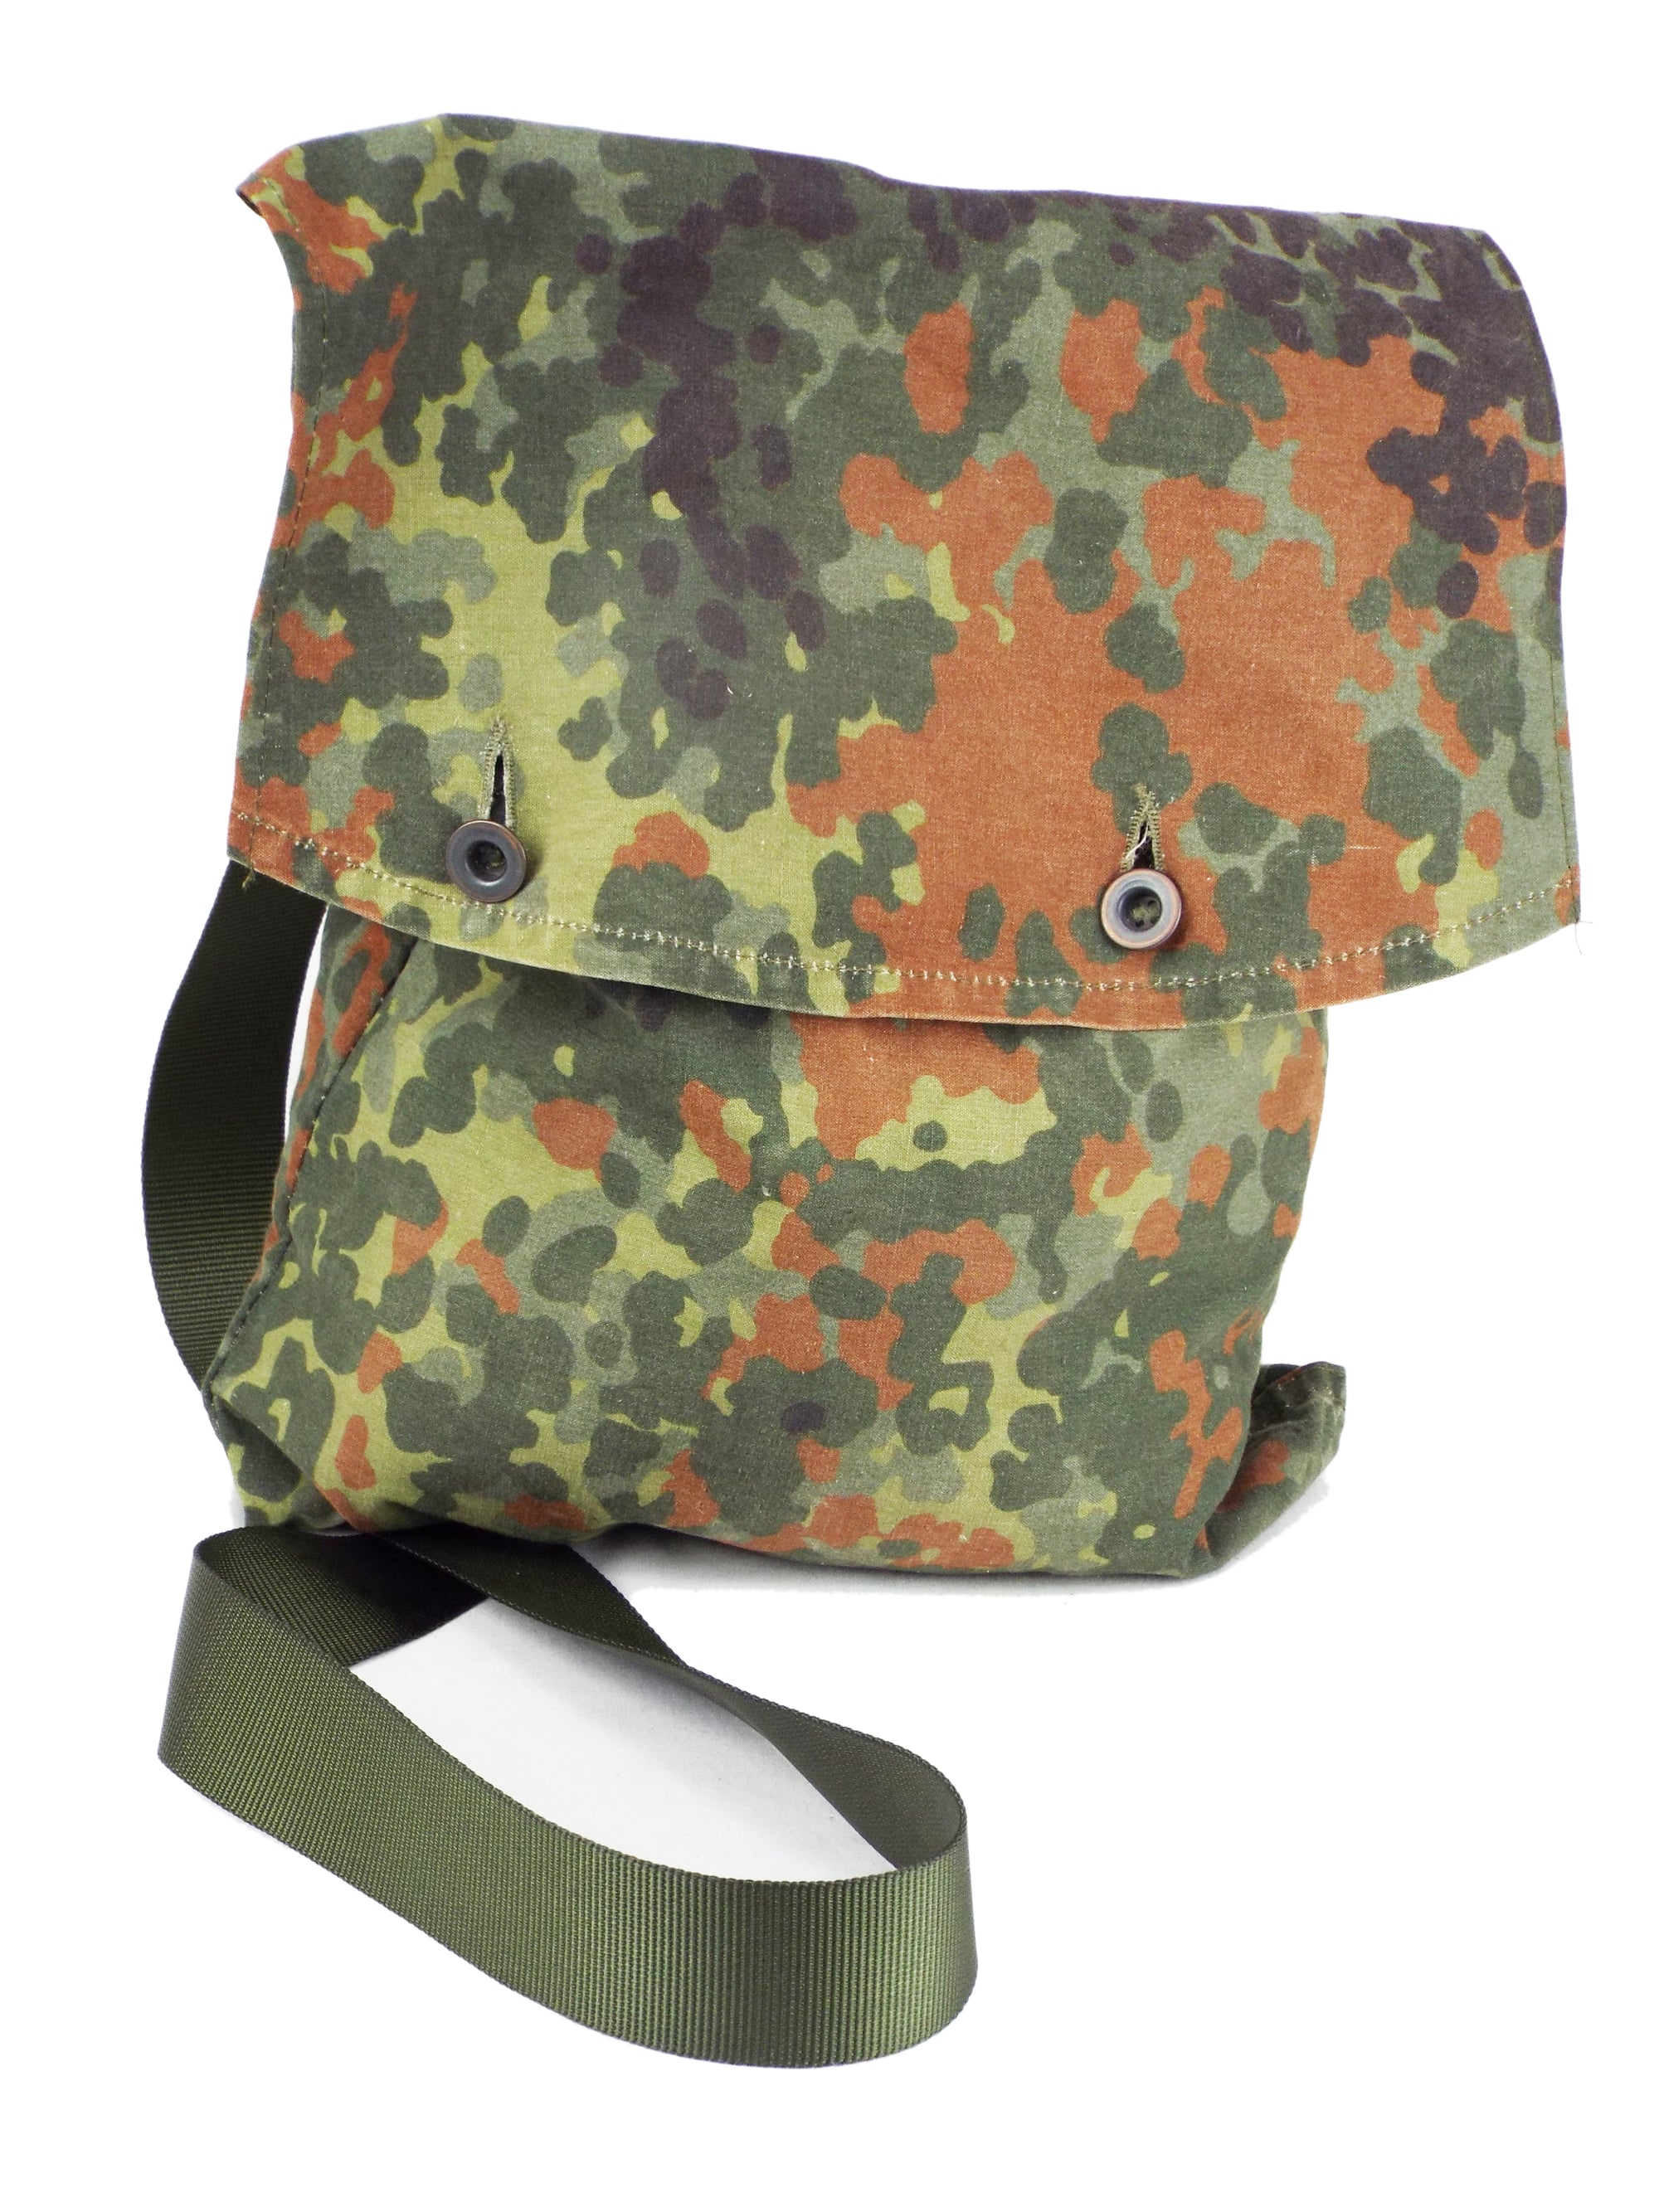 German Flecktarn camo general purpose bag - with added shoulder strap